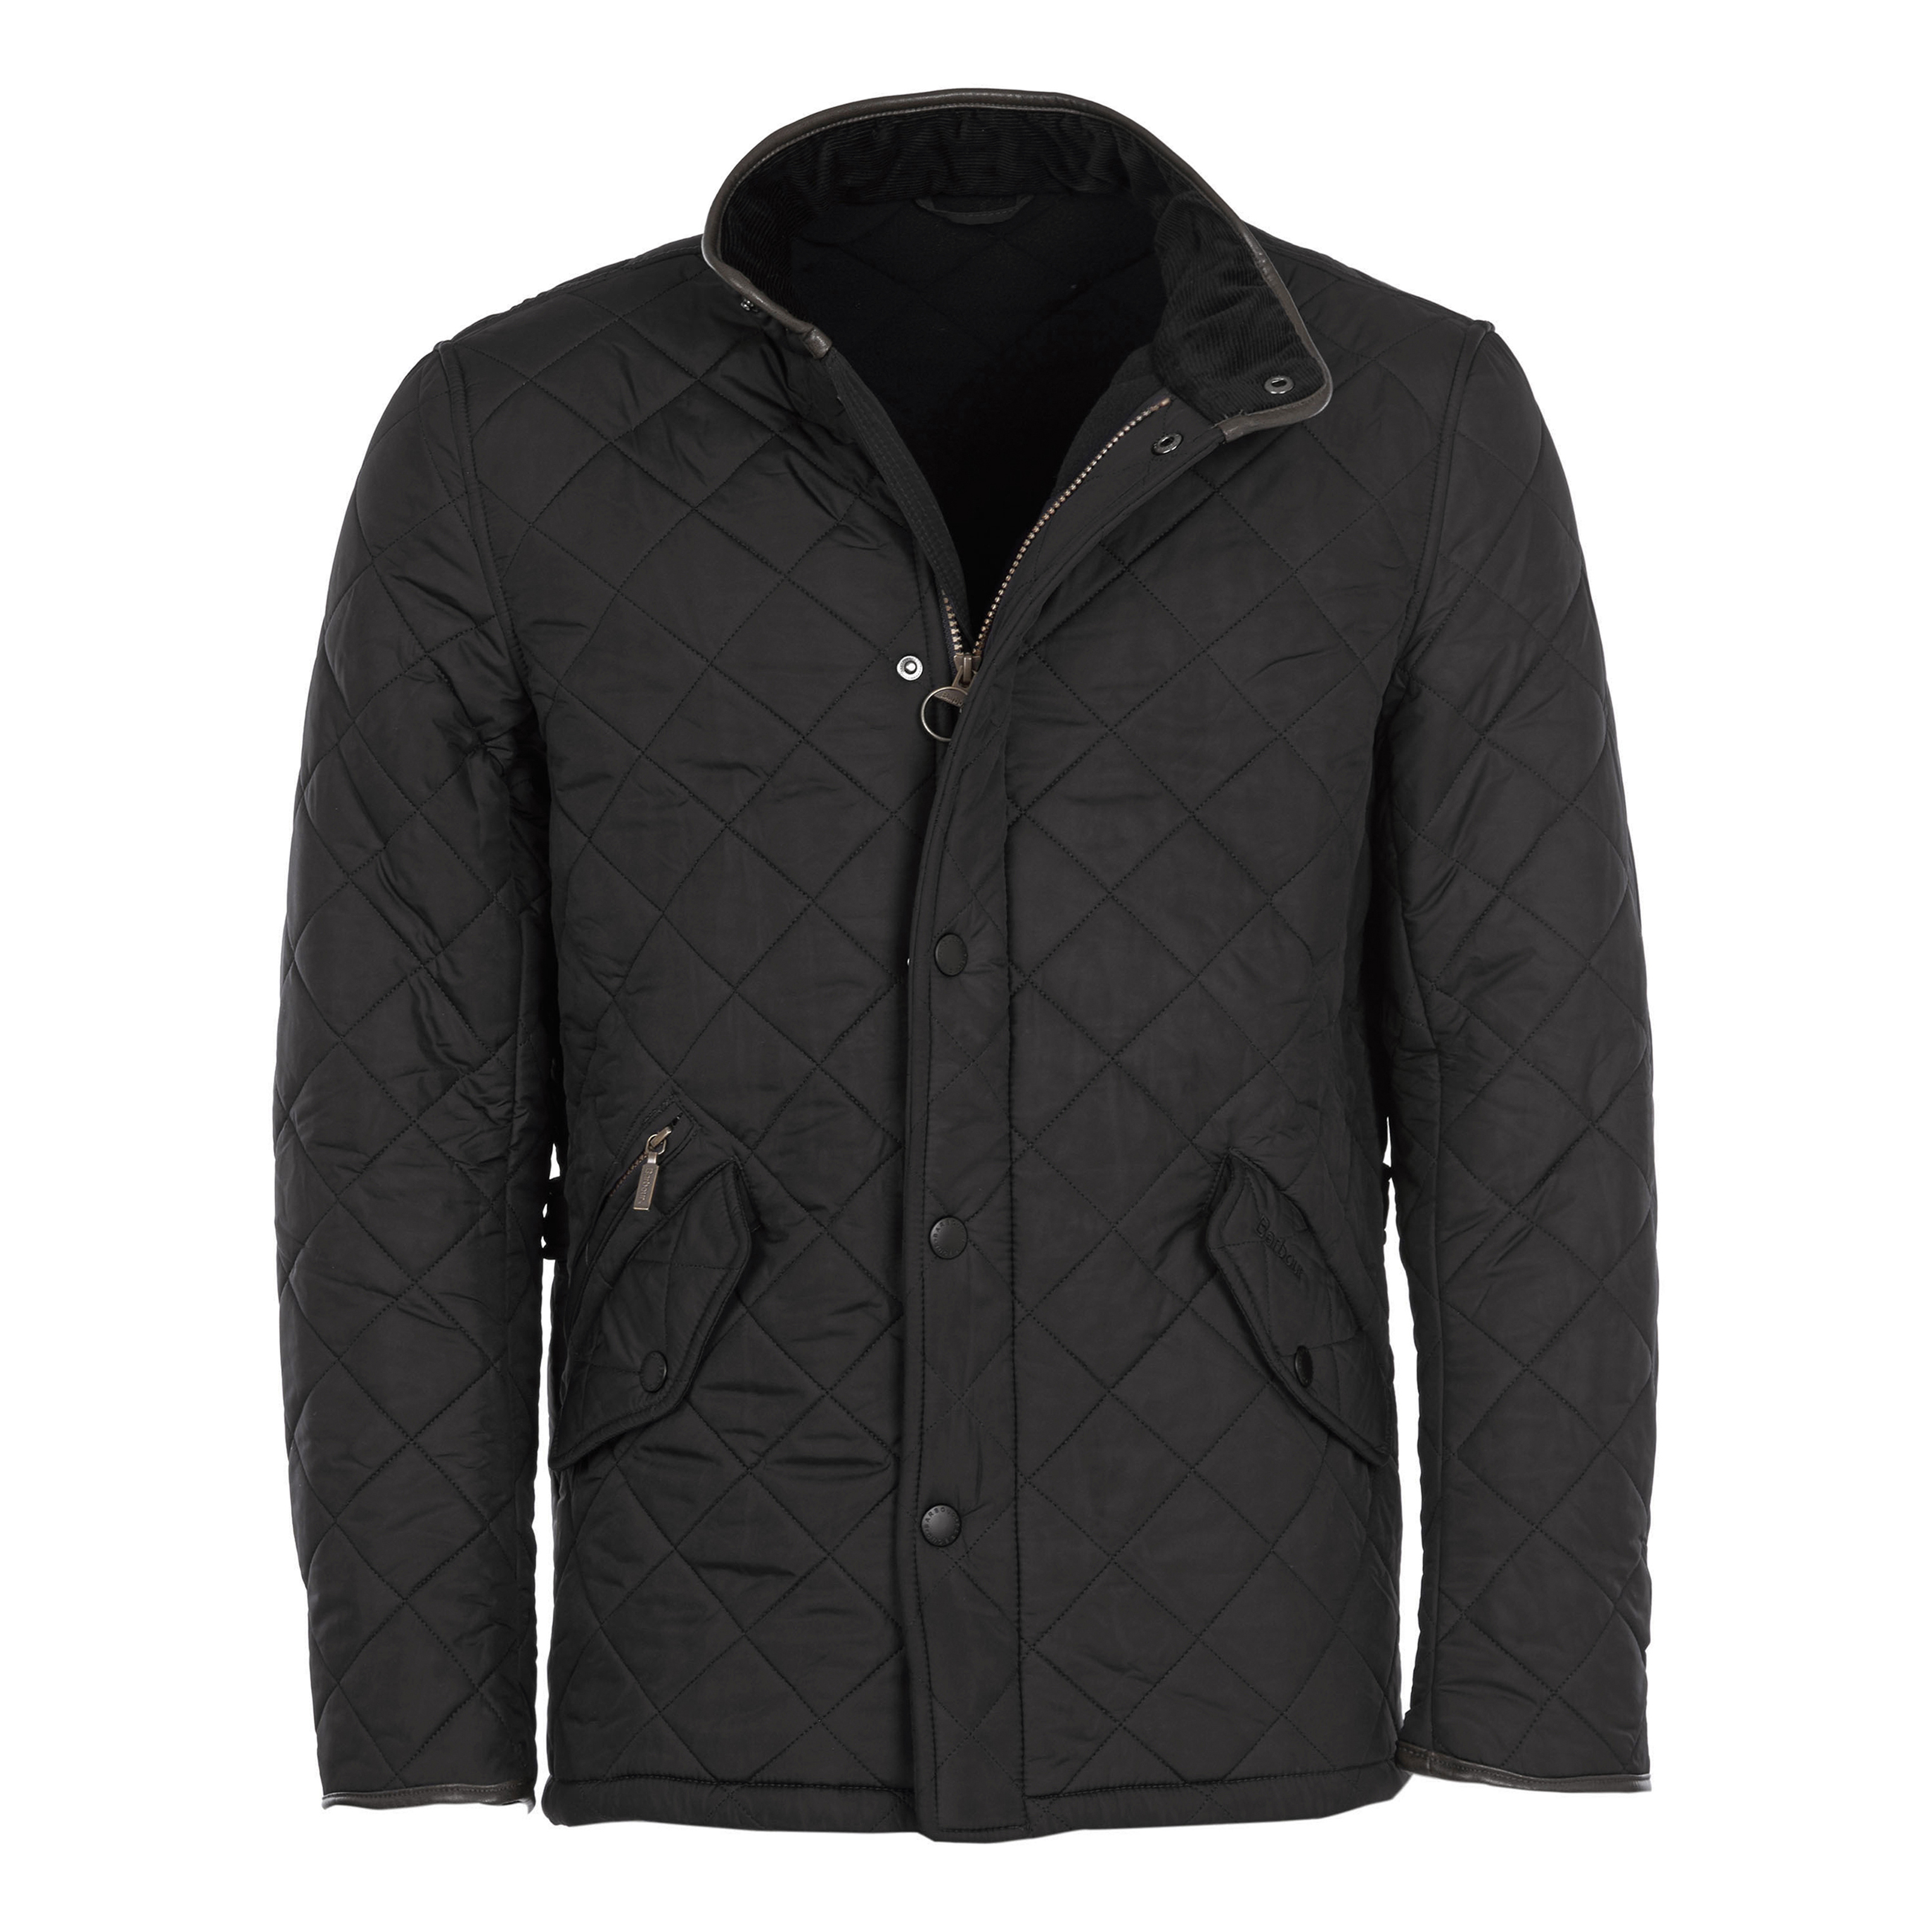 Quilted jacket - Black - Men | H&M IN